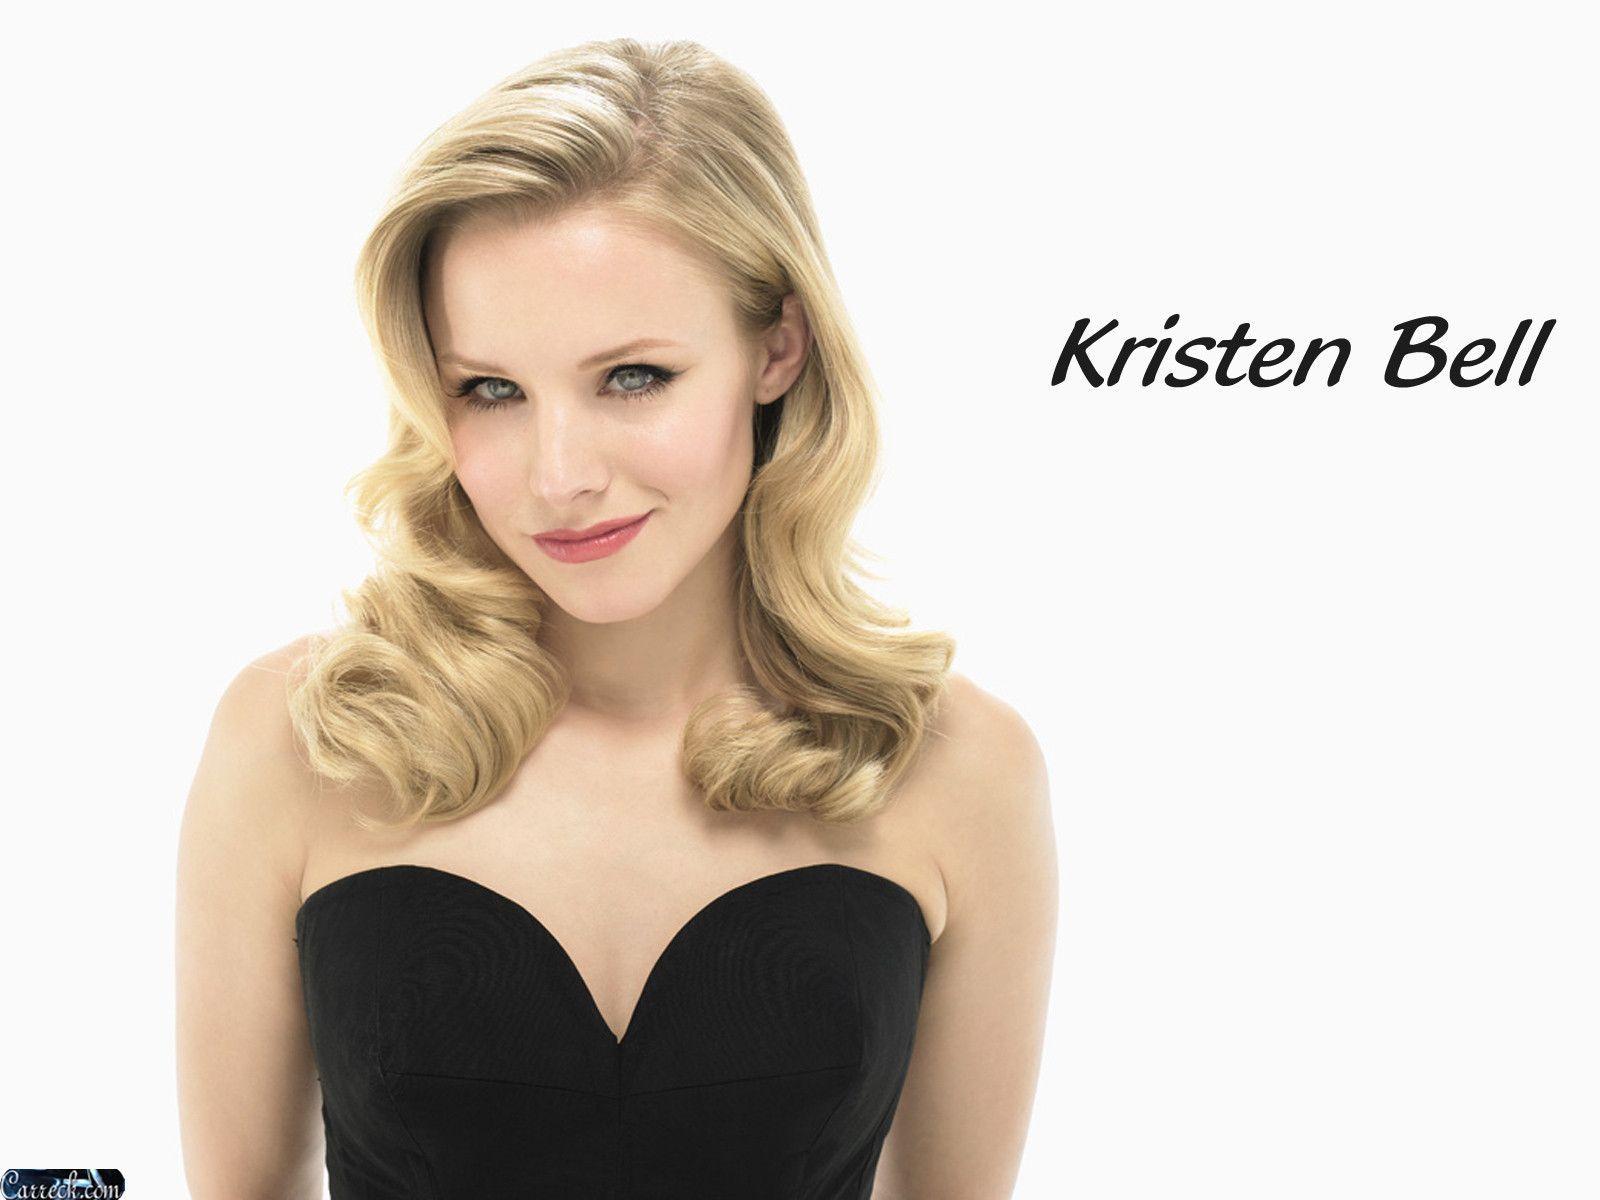 Kristen Bell 1080P, 2K, 4K, 5K HD wallpapers free download